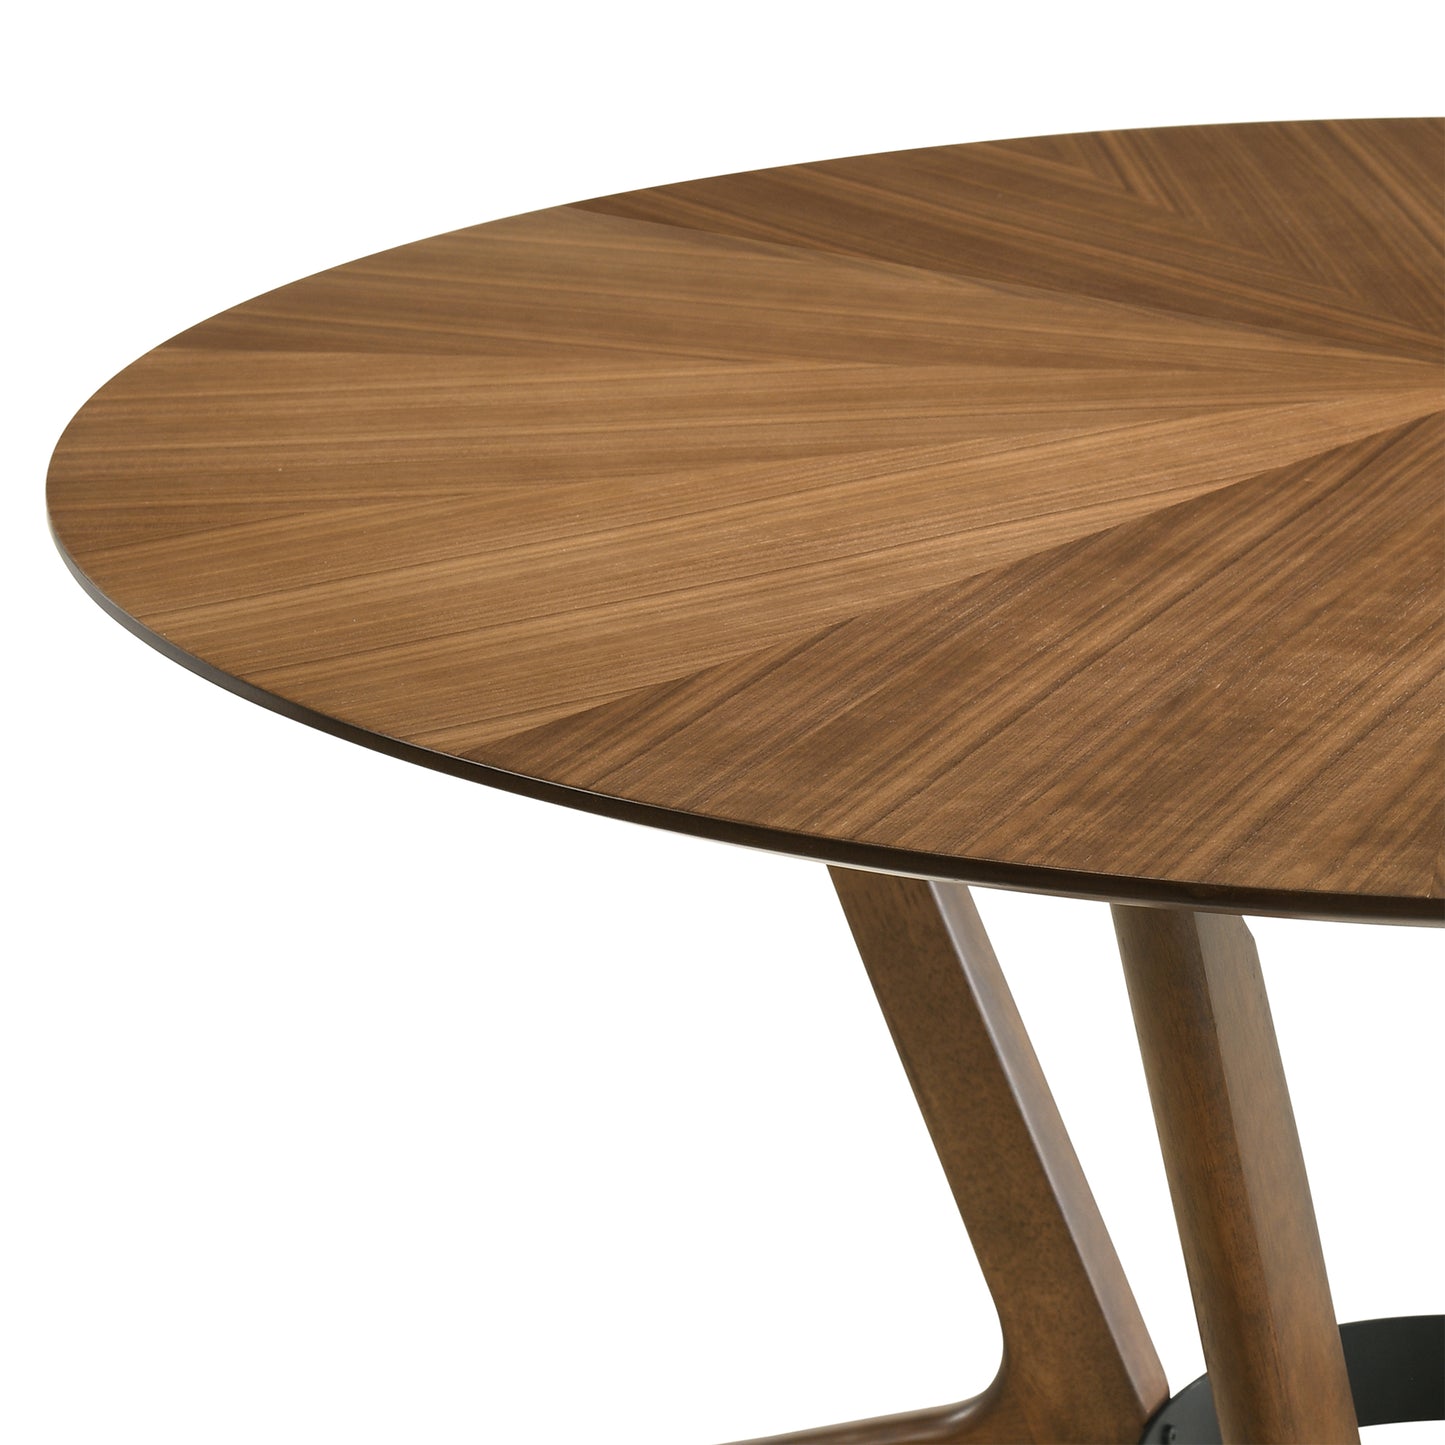 Santana 7 Piece Round Walnut Wood Dining Table Set with Charcoal Fabric